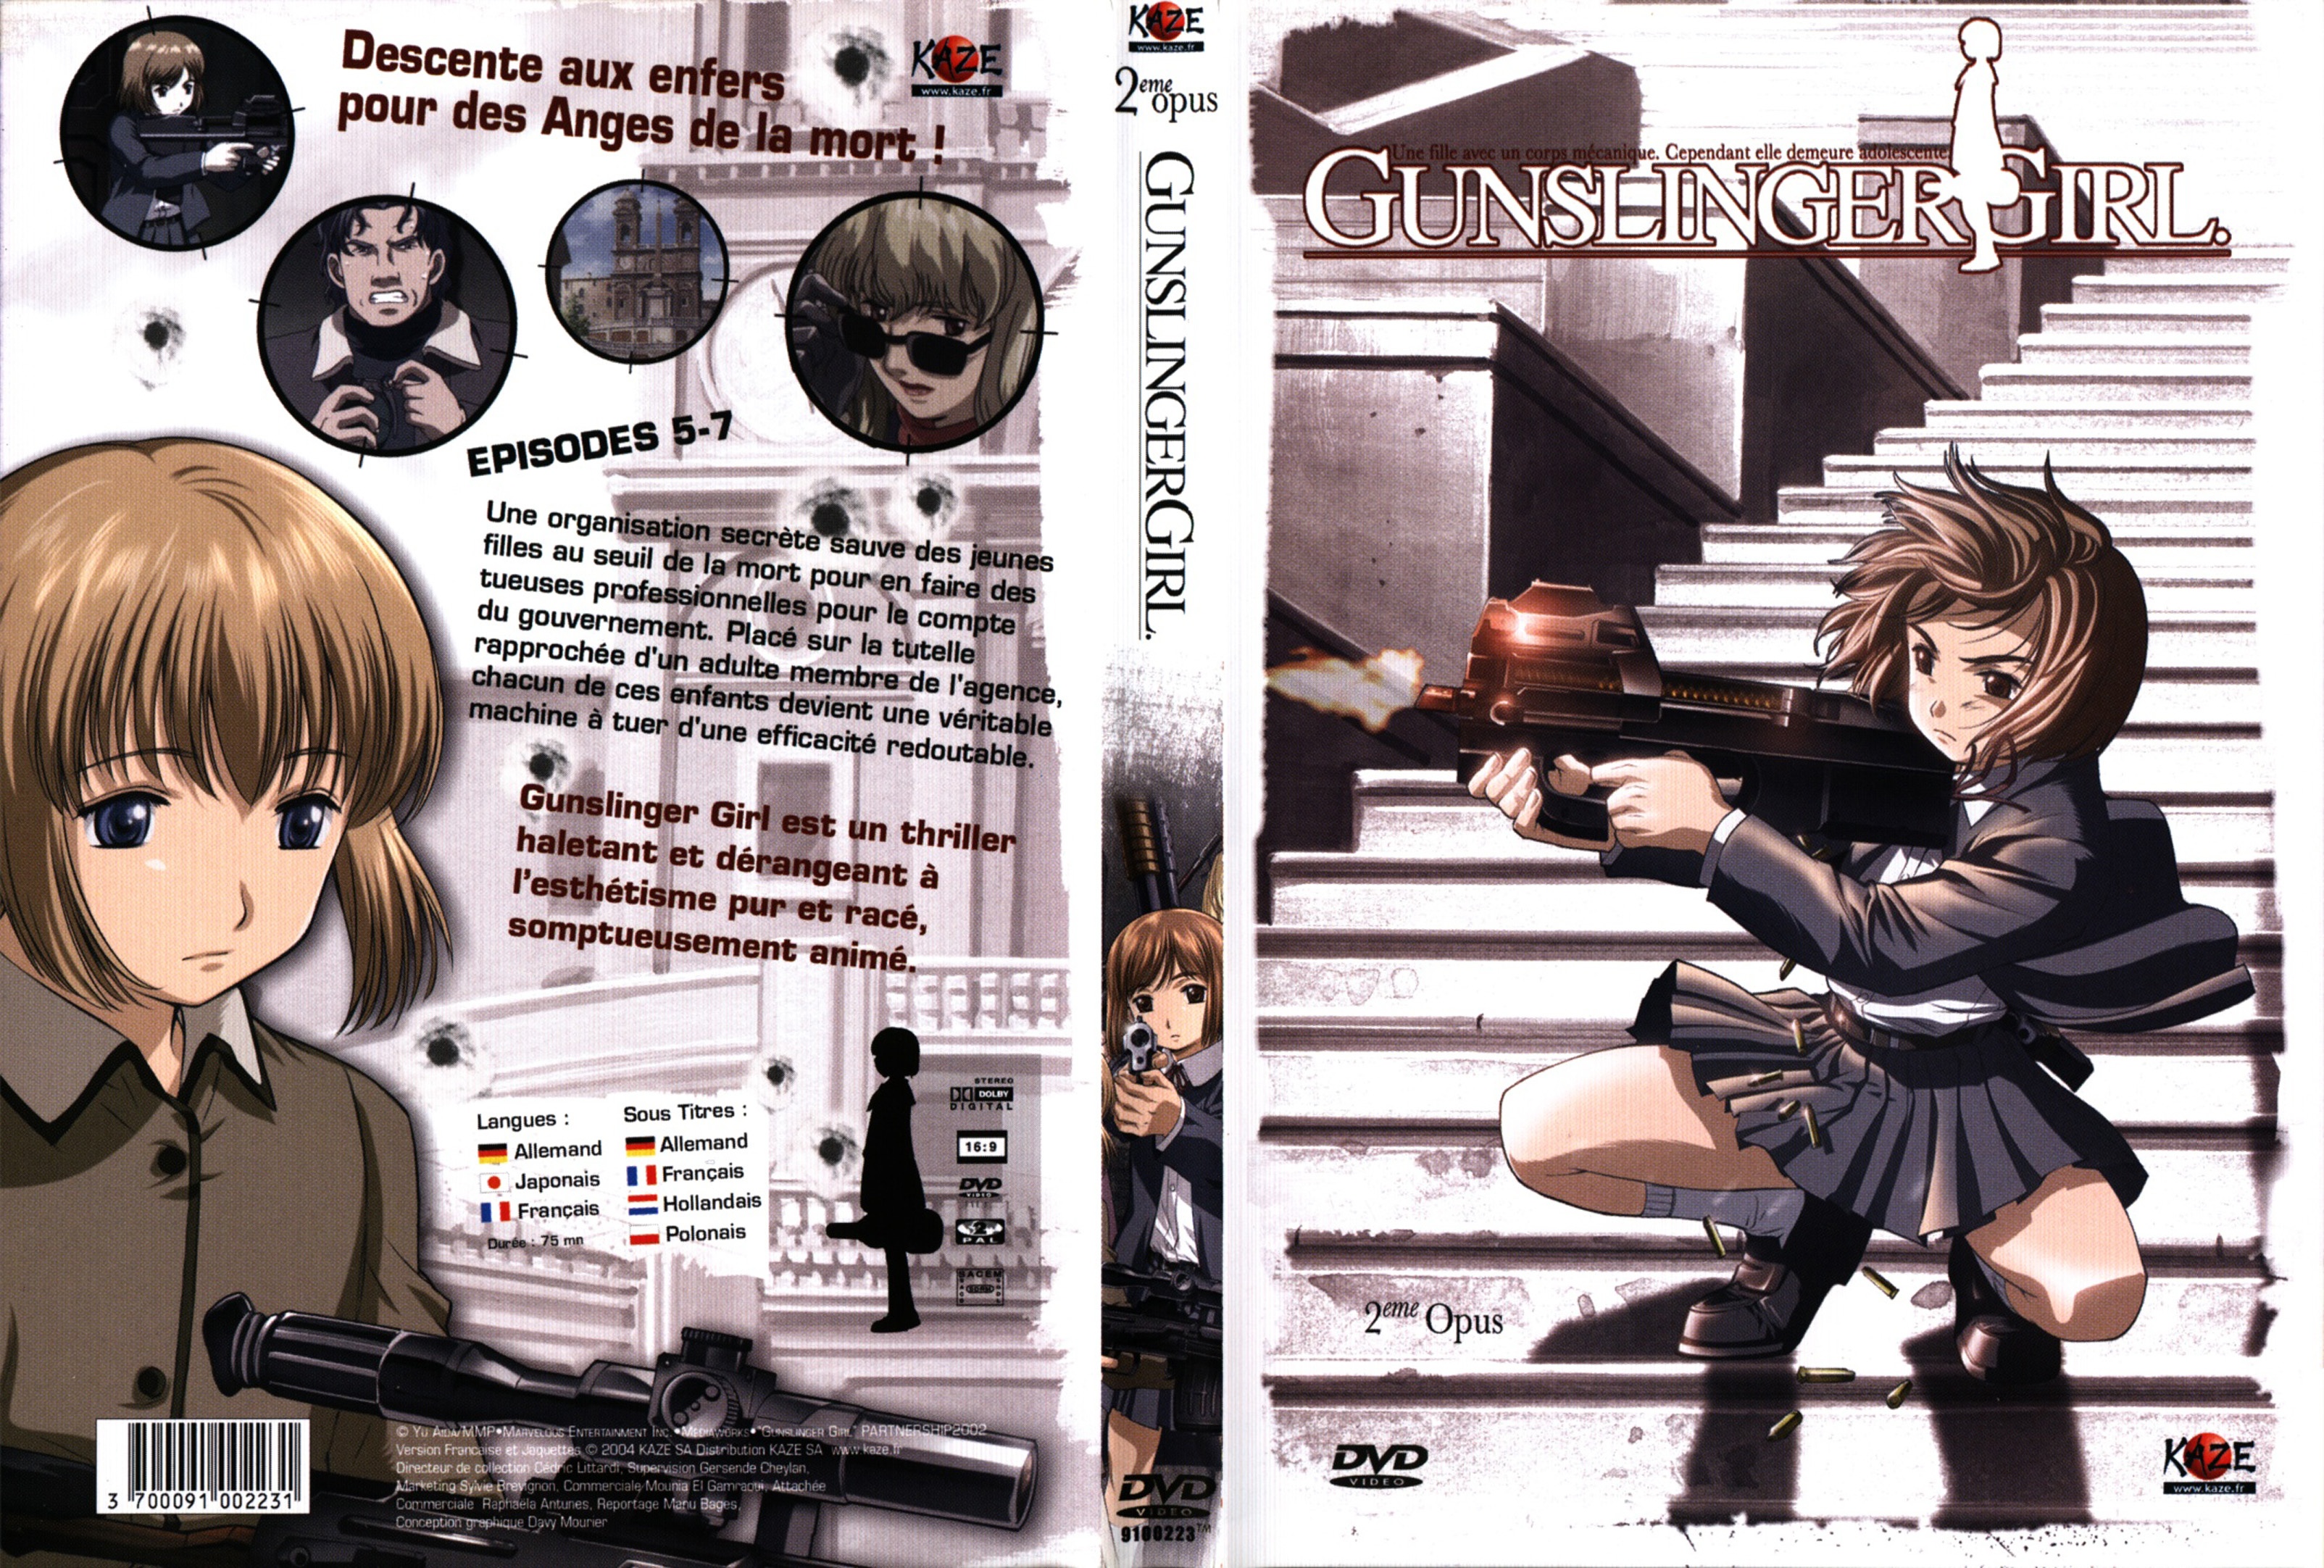 Jaquette DVD Gunslinger Girl vol 02